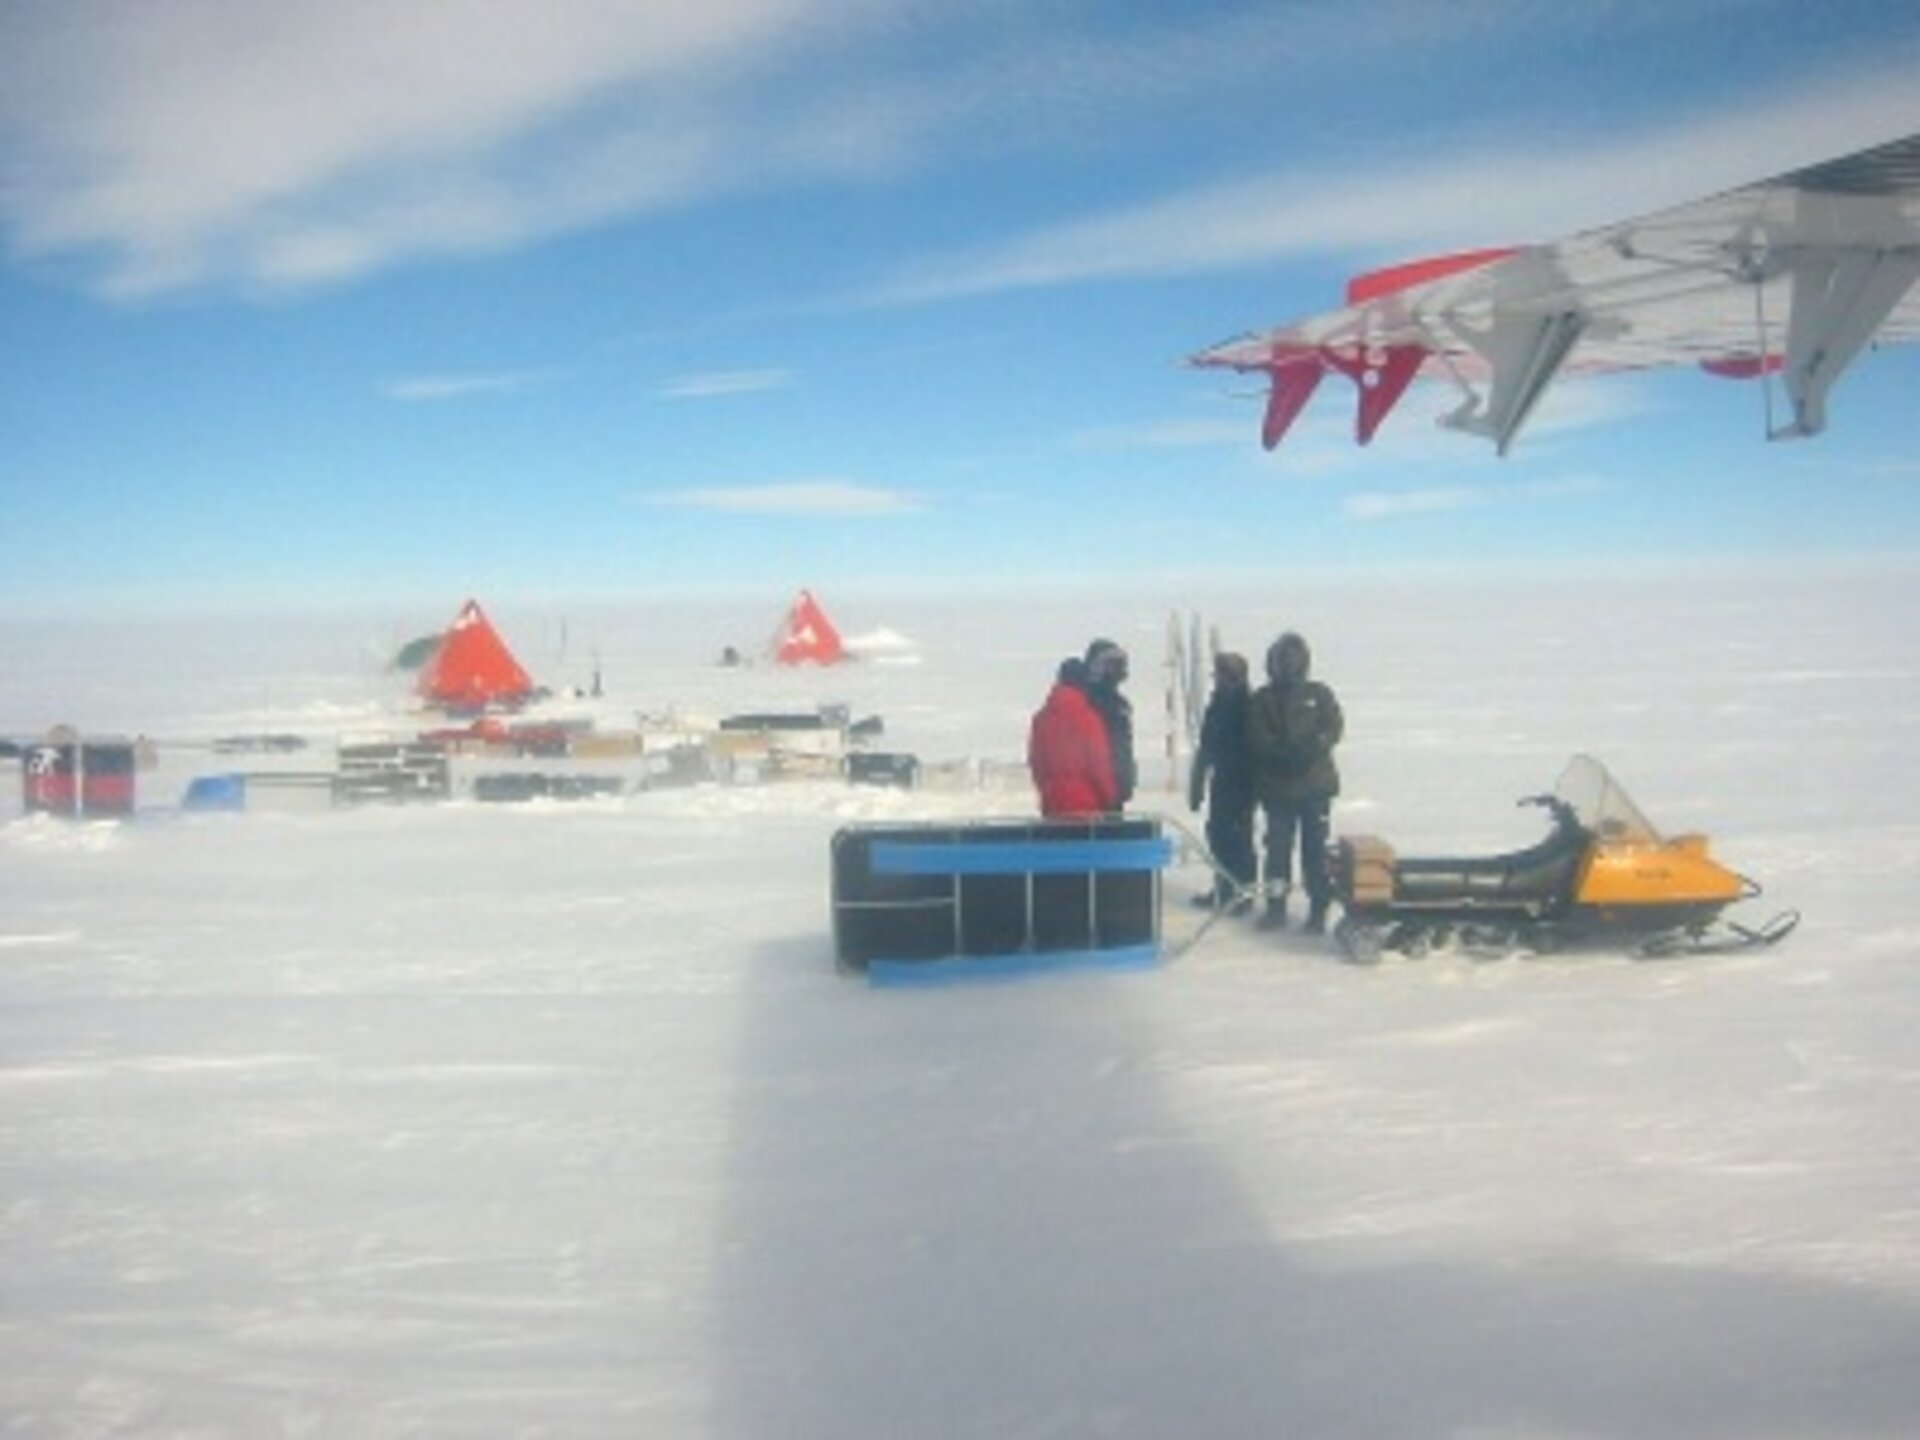 Researchers unloading equipment